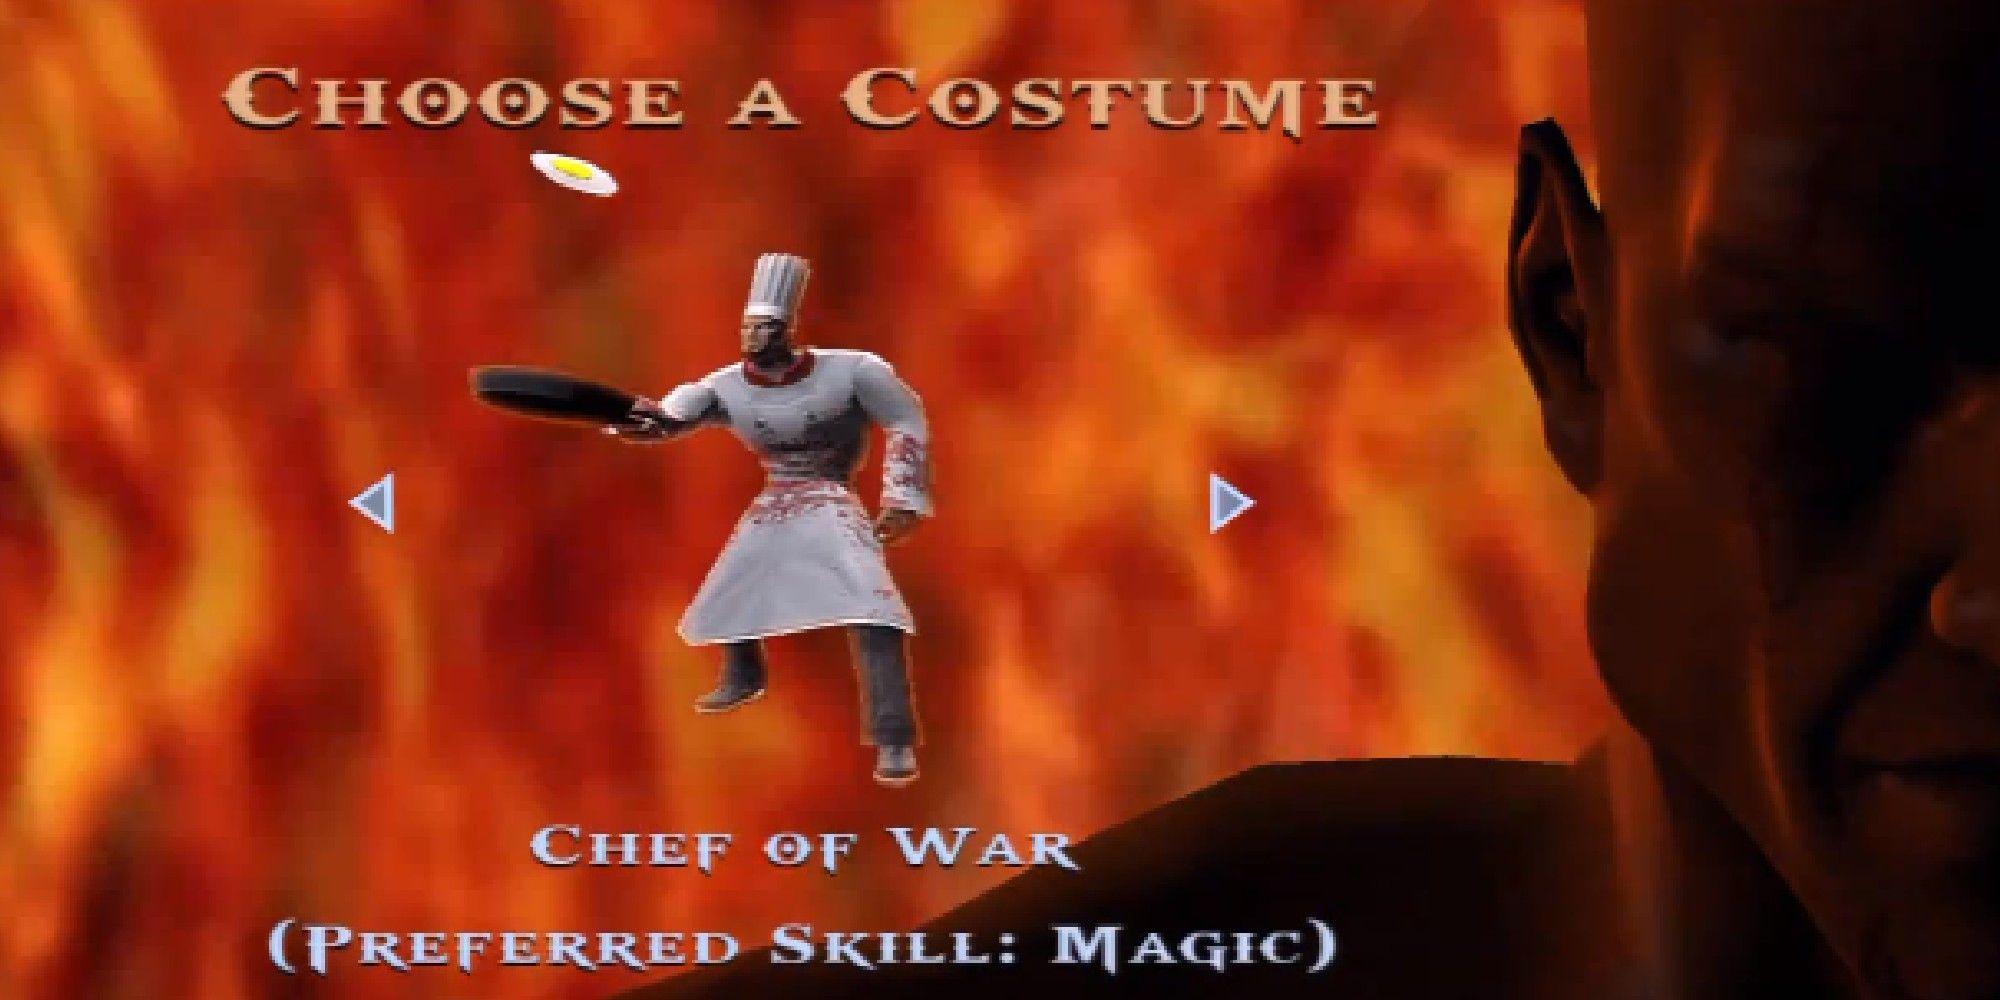 God-of-war-costume-chef